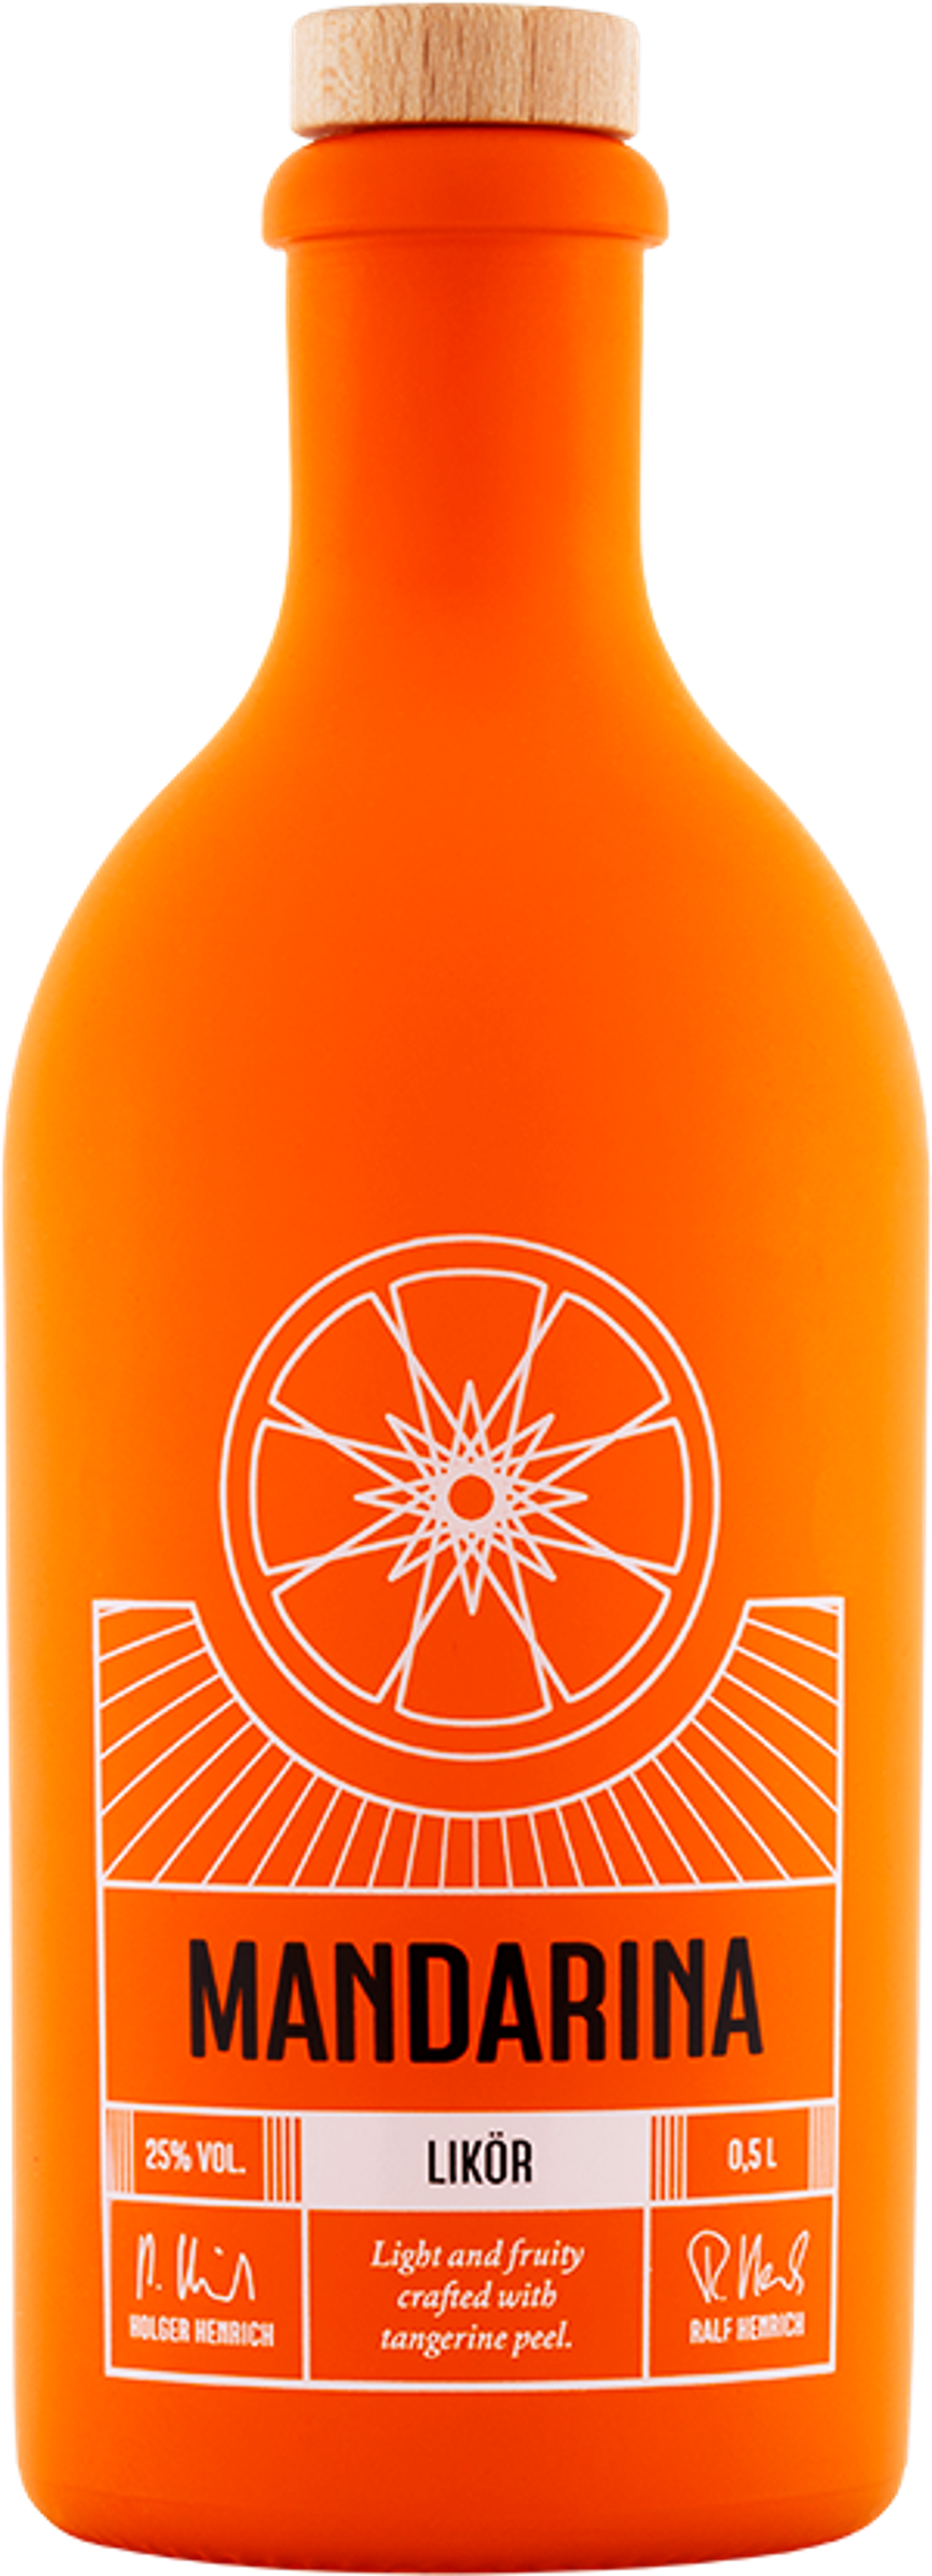 Mandarina Likör 25.0% 0.5L, Spirits